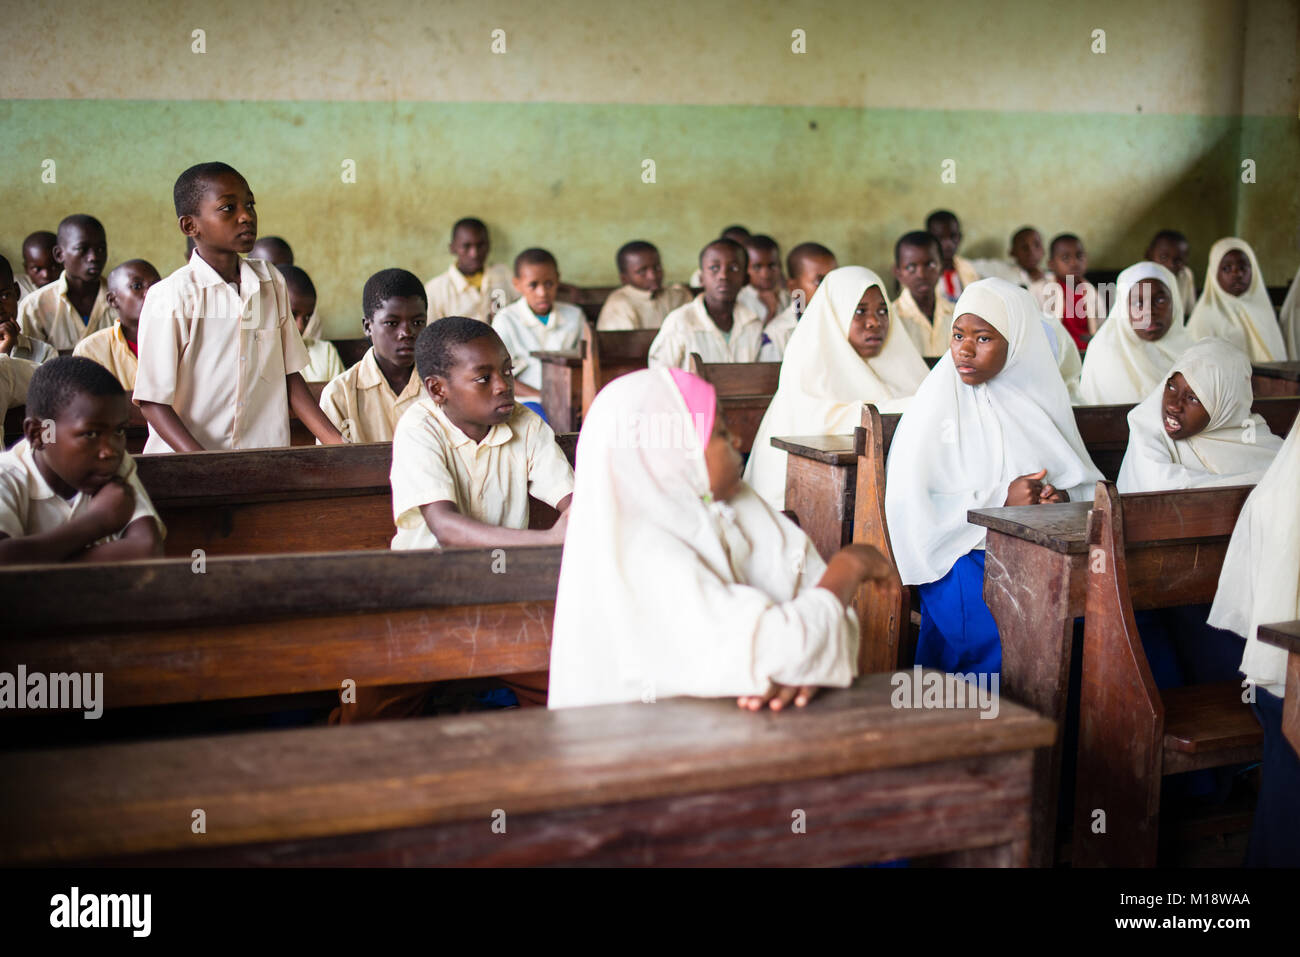 KENDWA, ZANZIBAR - JAN 10, 2018: Students in a classroom during English lesson, Primary school at Kendwa, Zanzibar Stock Photo